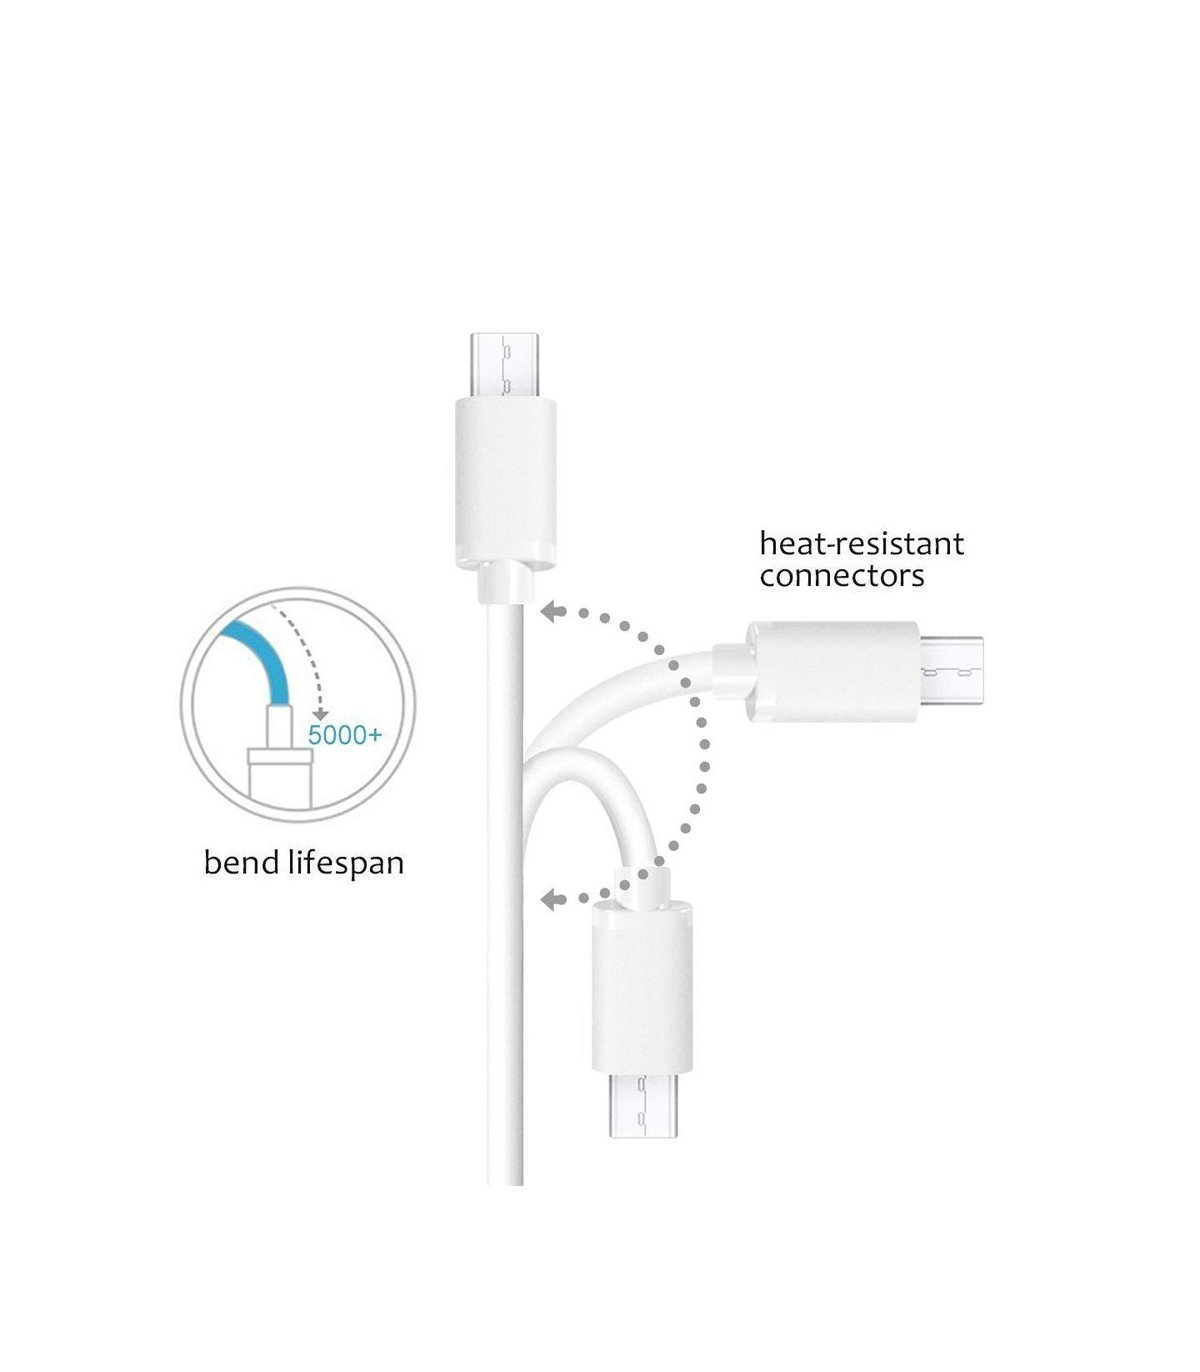 Lightning USB cable for Apple iPhone / iPad / iPod etc.